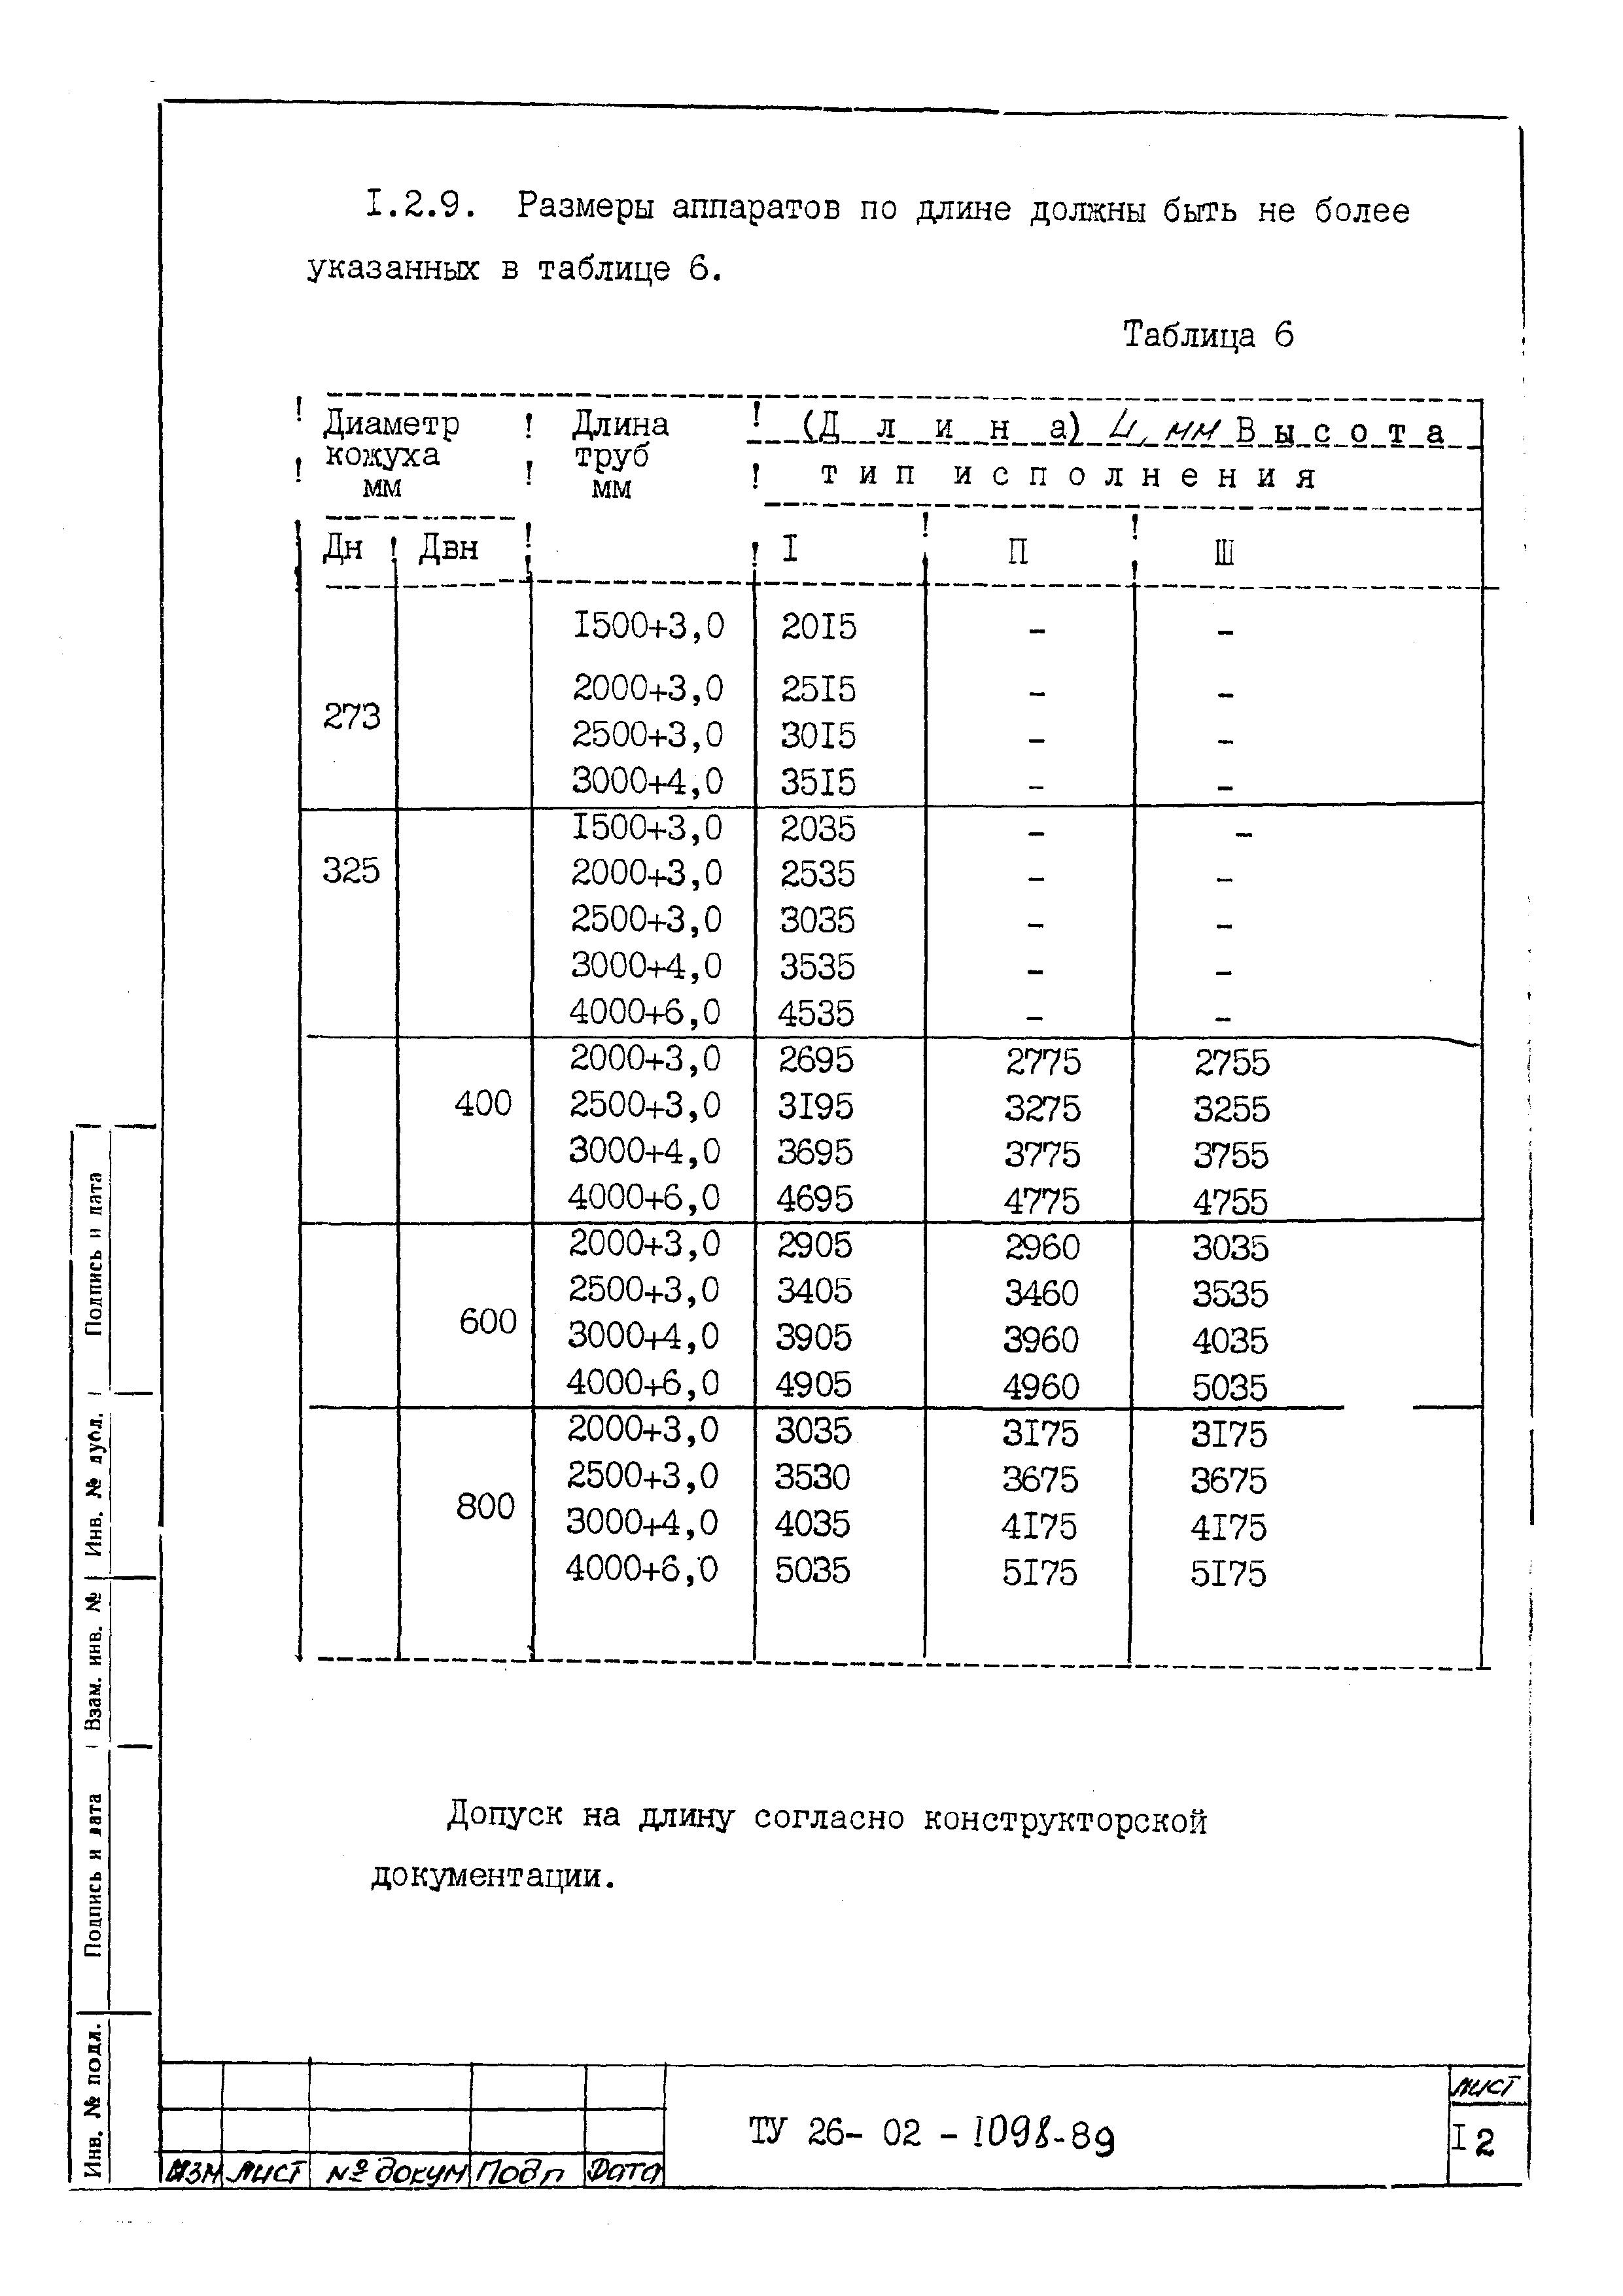 ТУ 26-02-1098-89